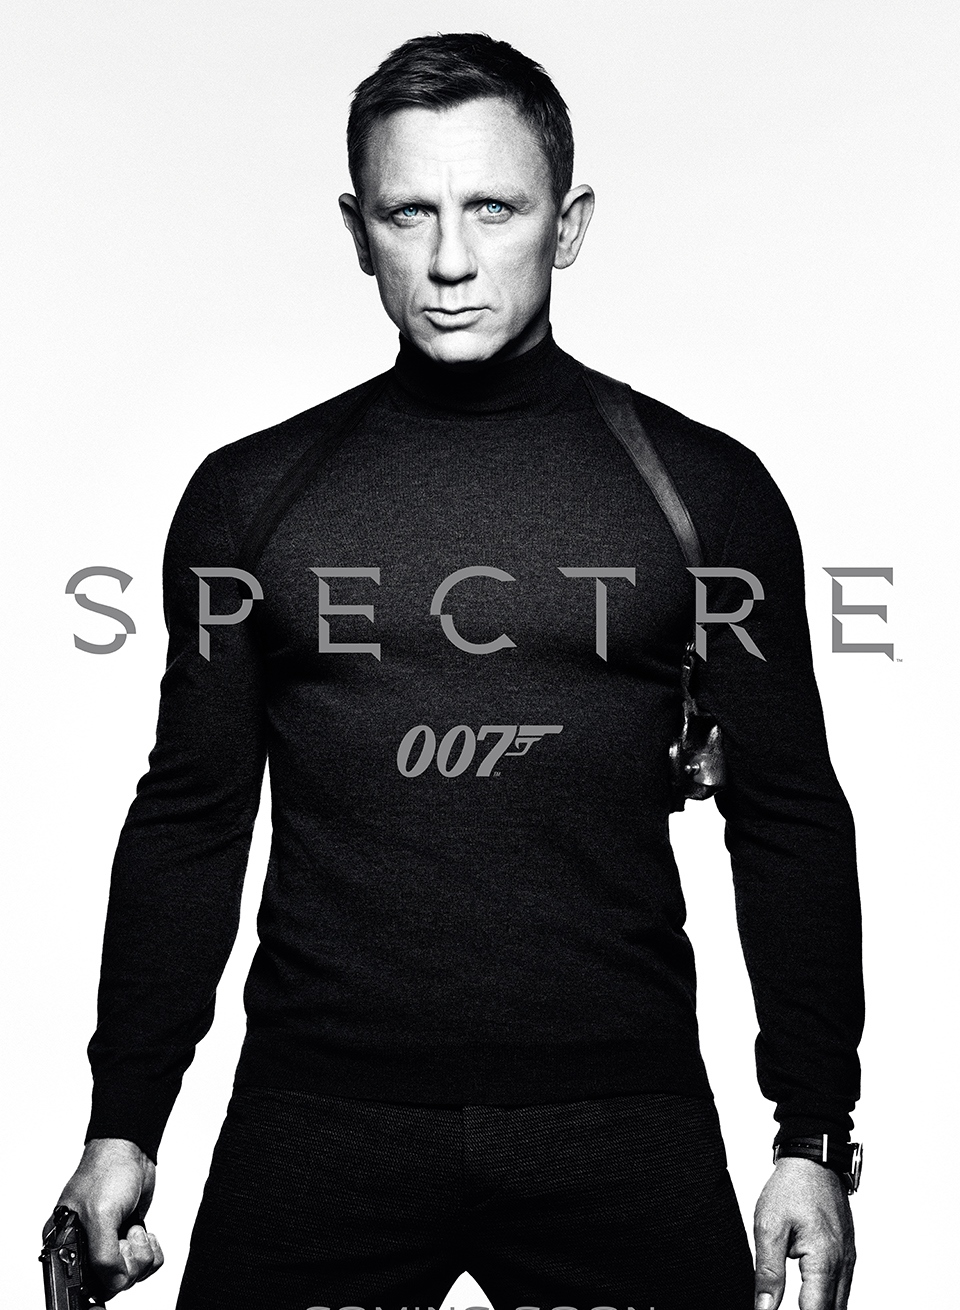  007 spectre (2015) Poster 